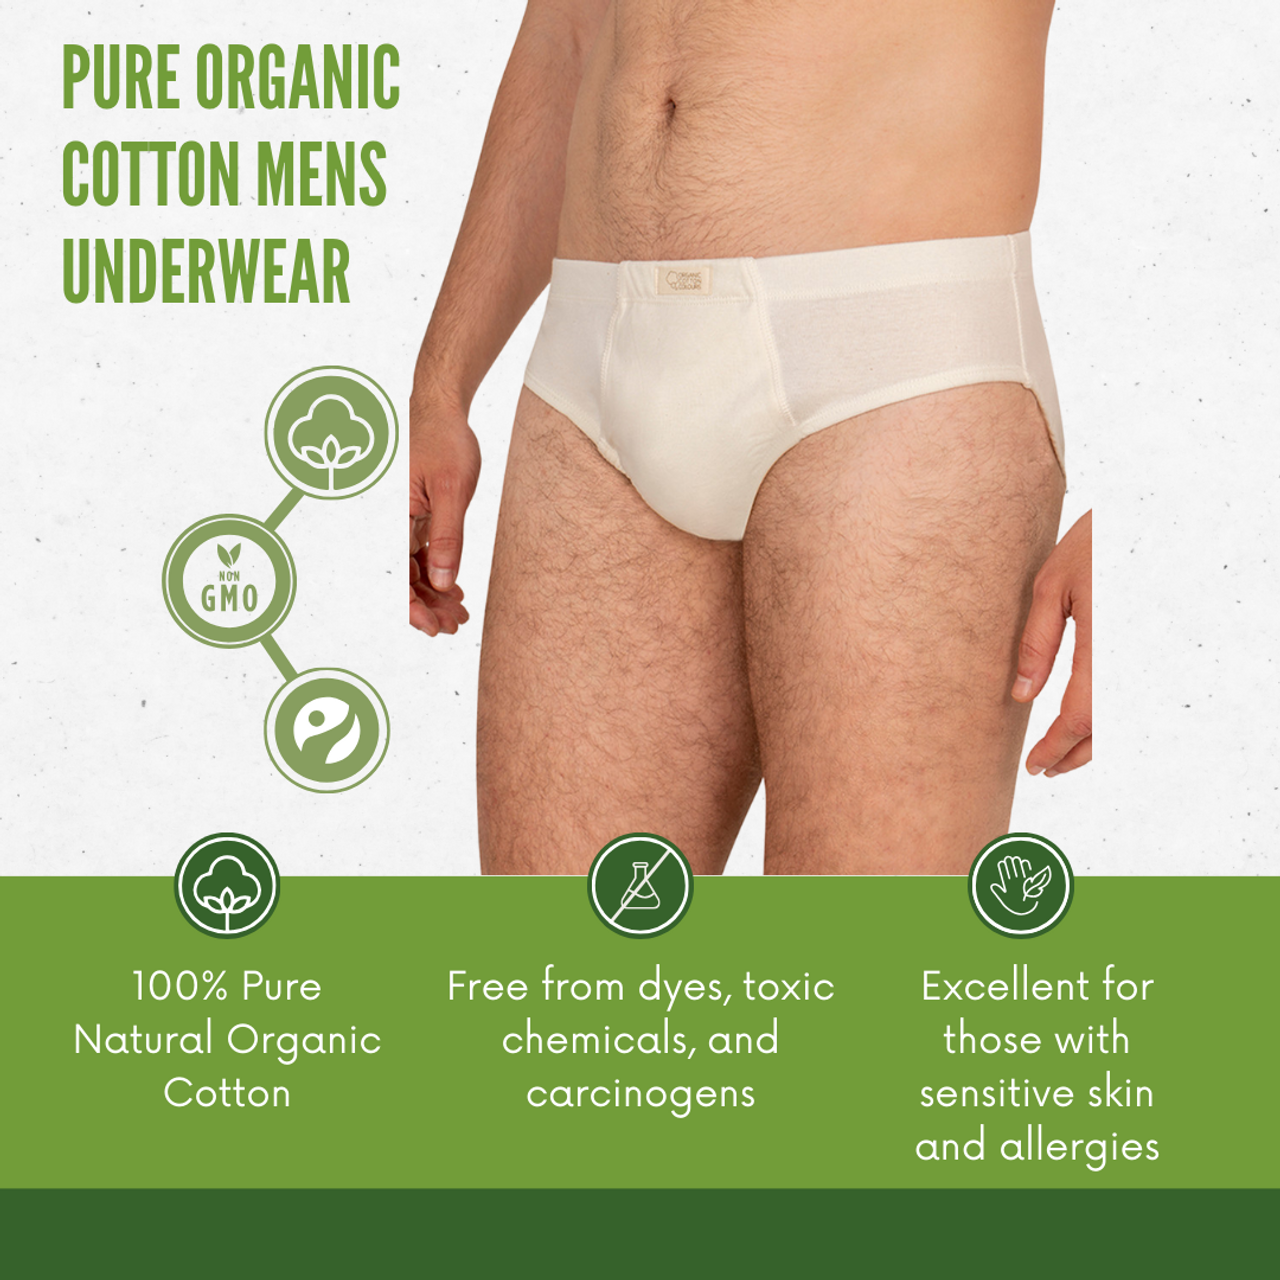 Natural Organic Cotton Fair Trade Eco-Friendly Underwear